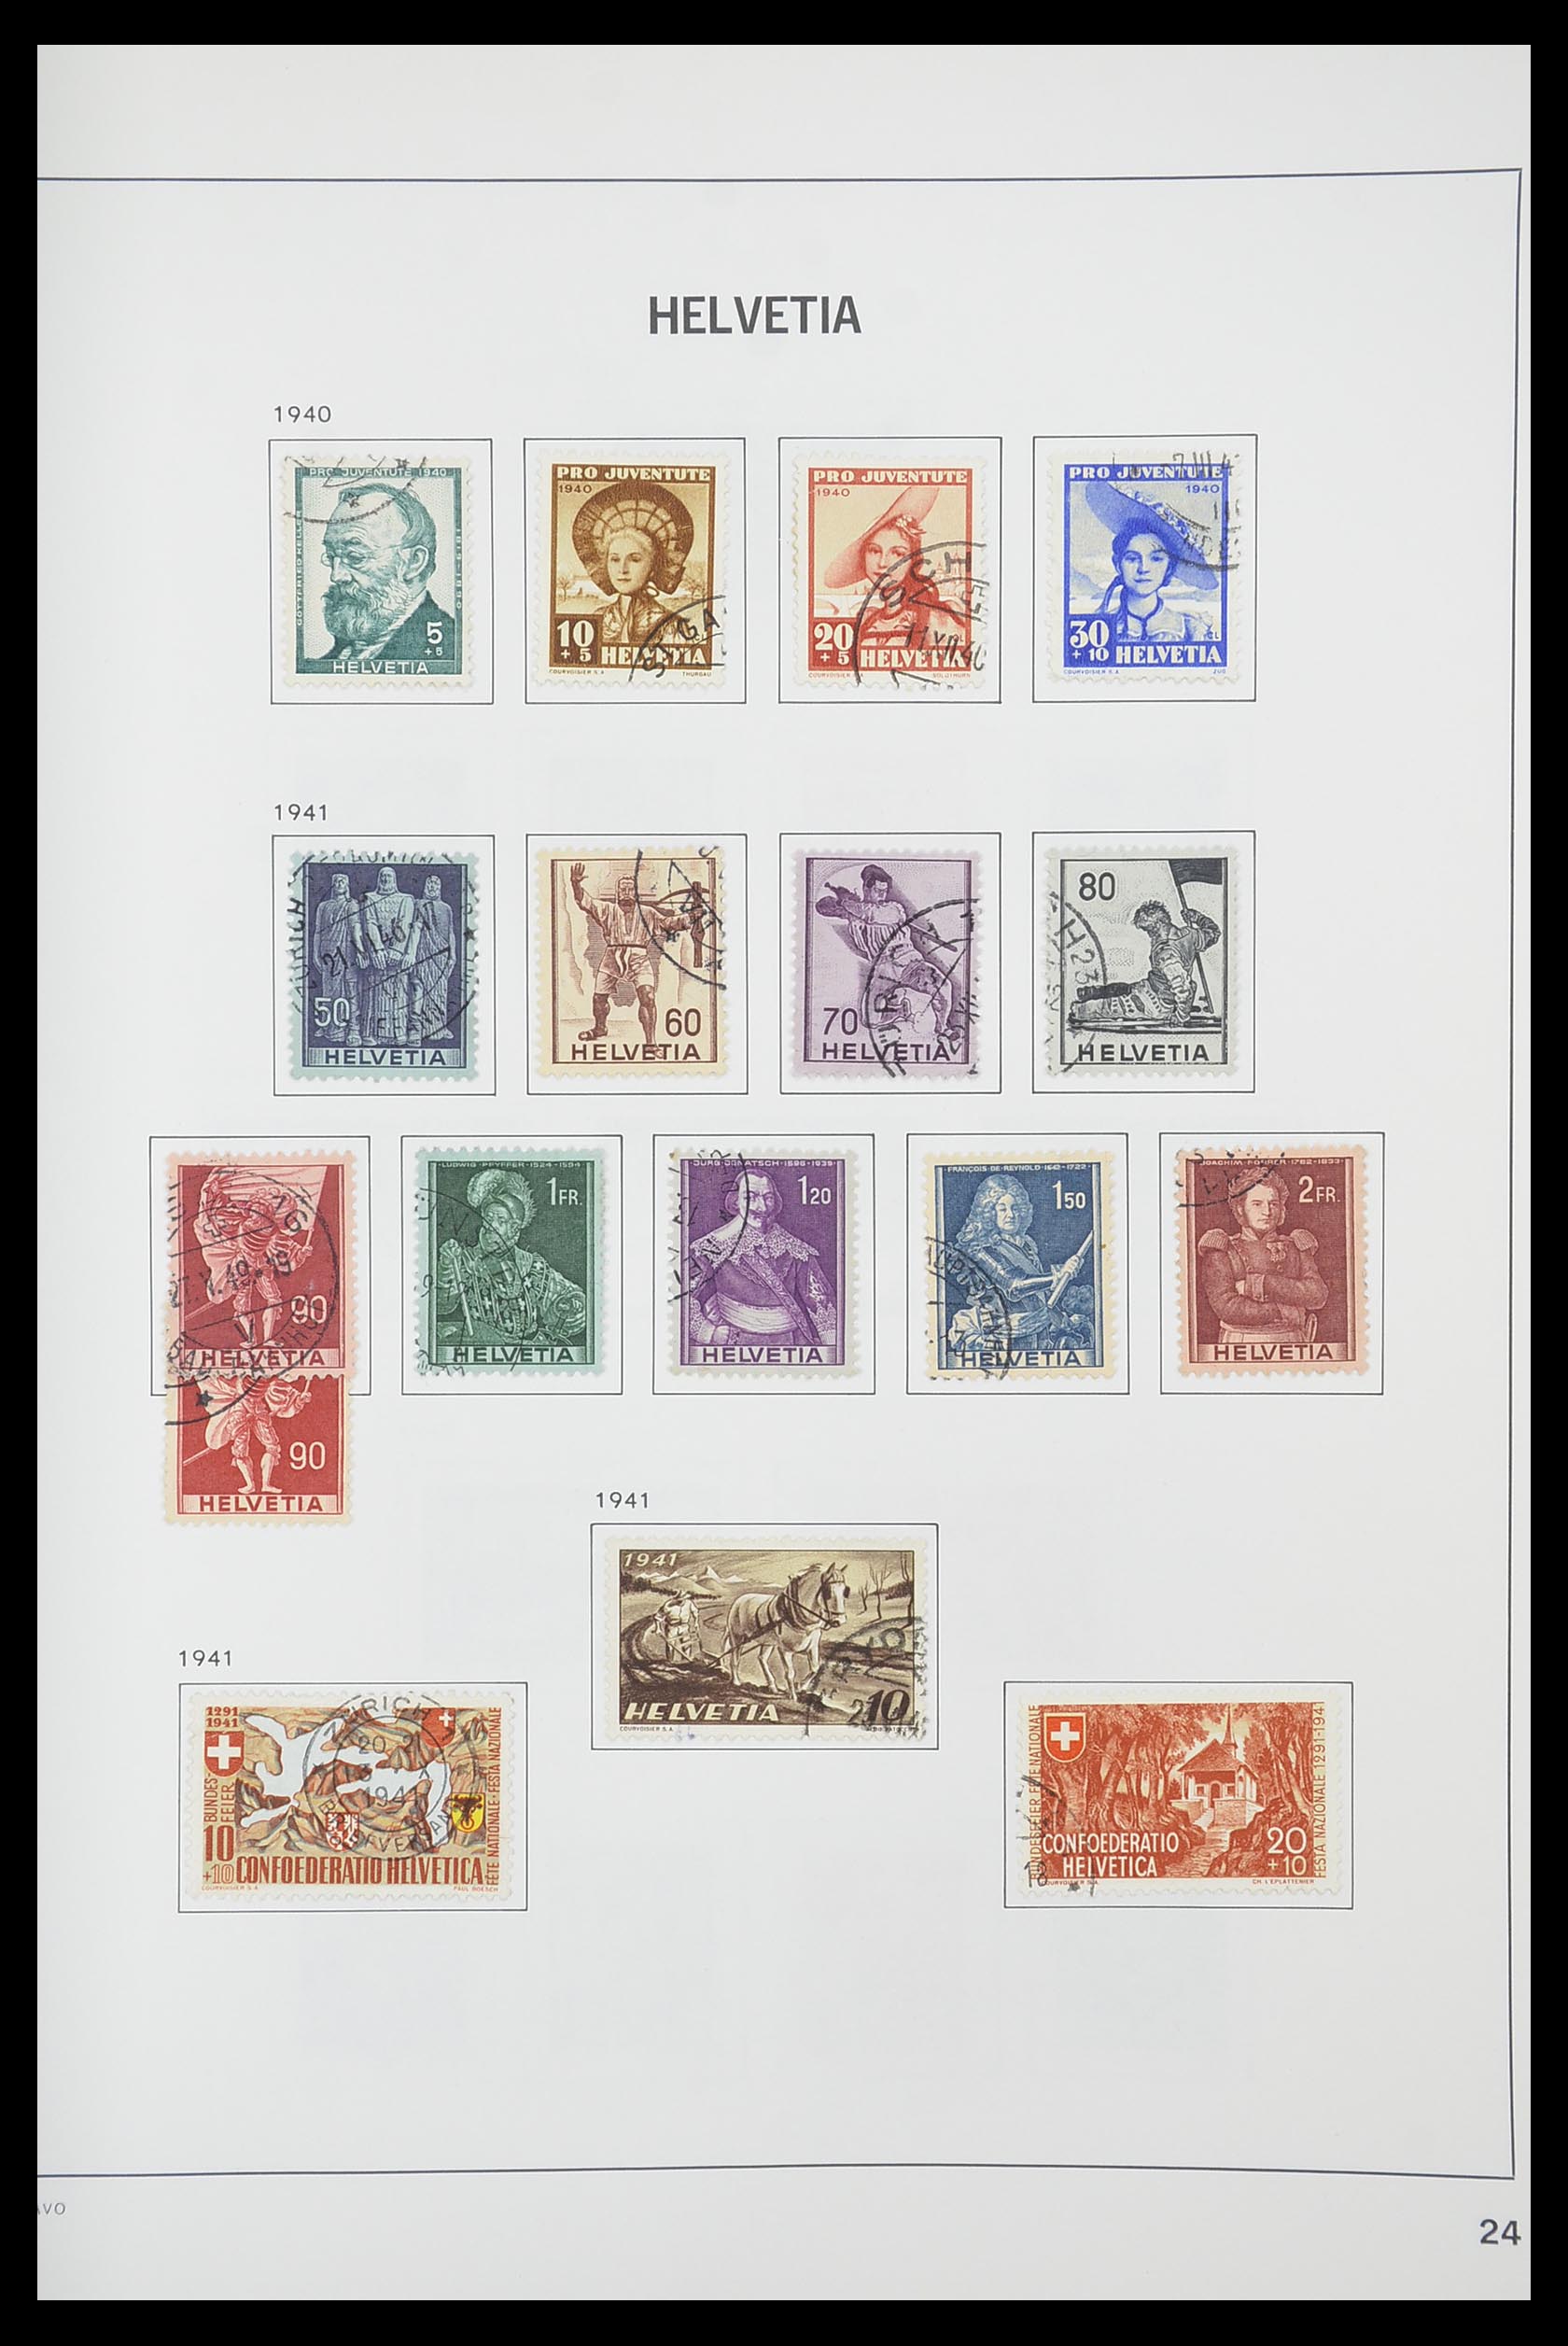 33925 022 - Stamp collection 33925 Switzerland 1854-1991.